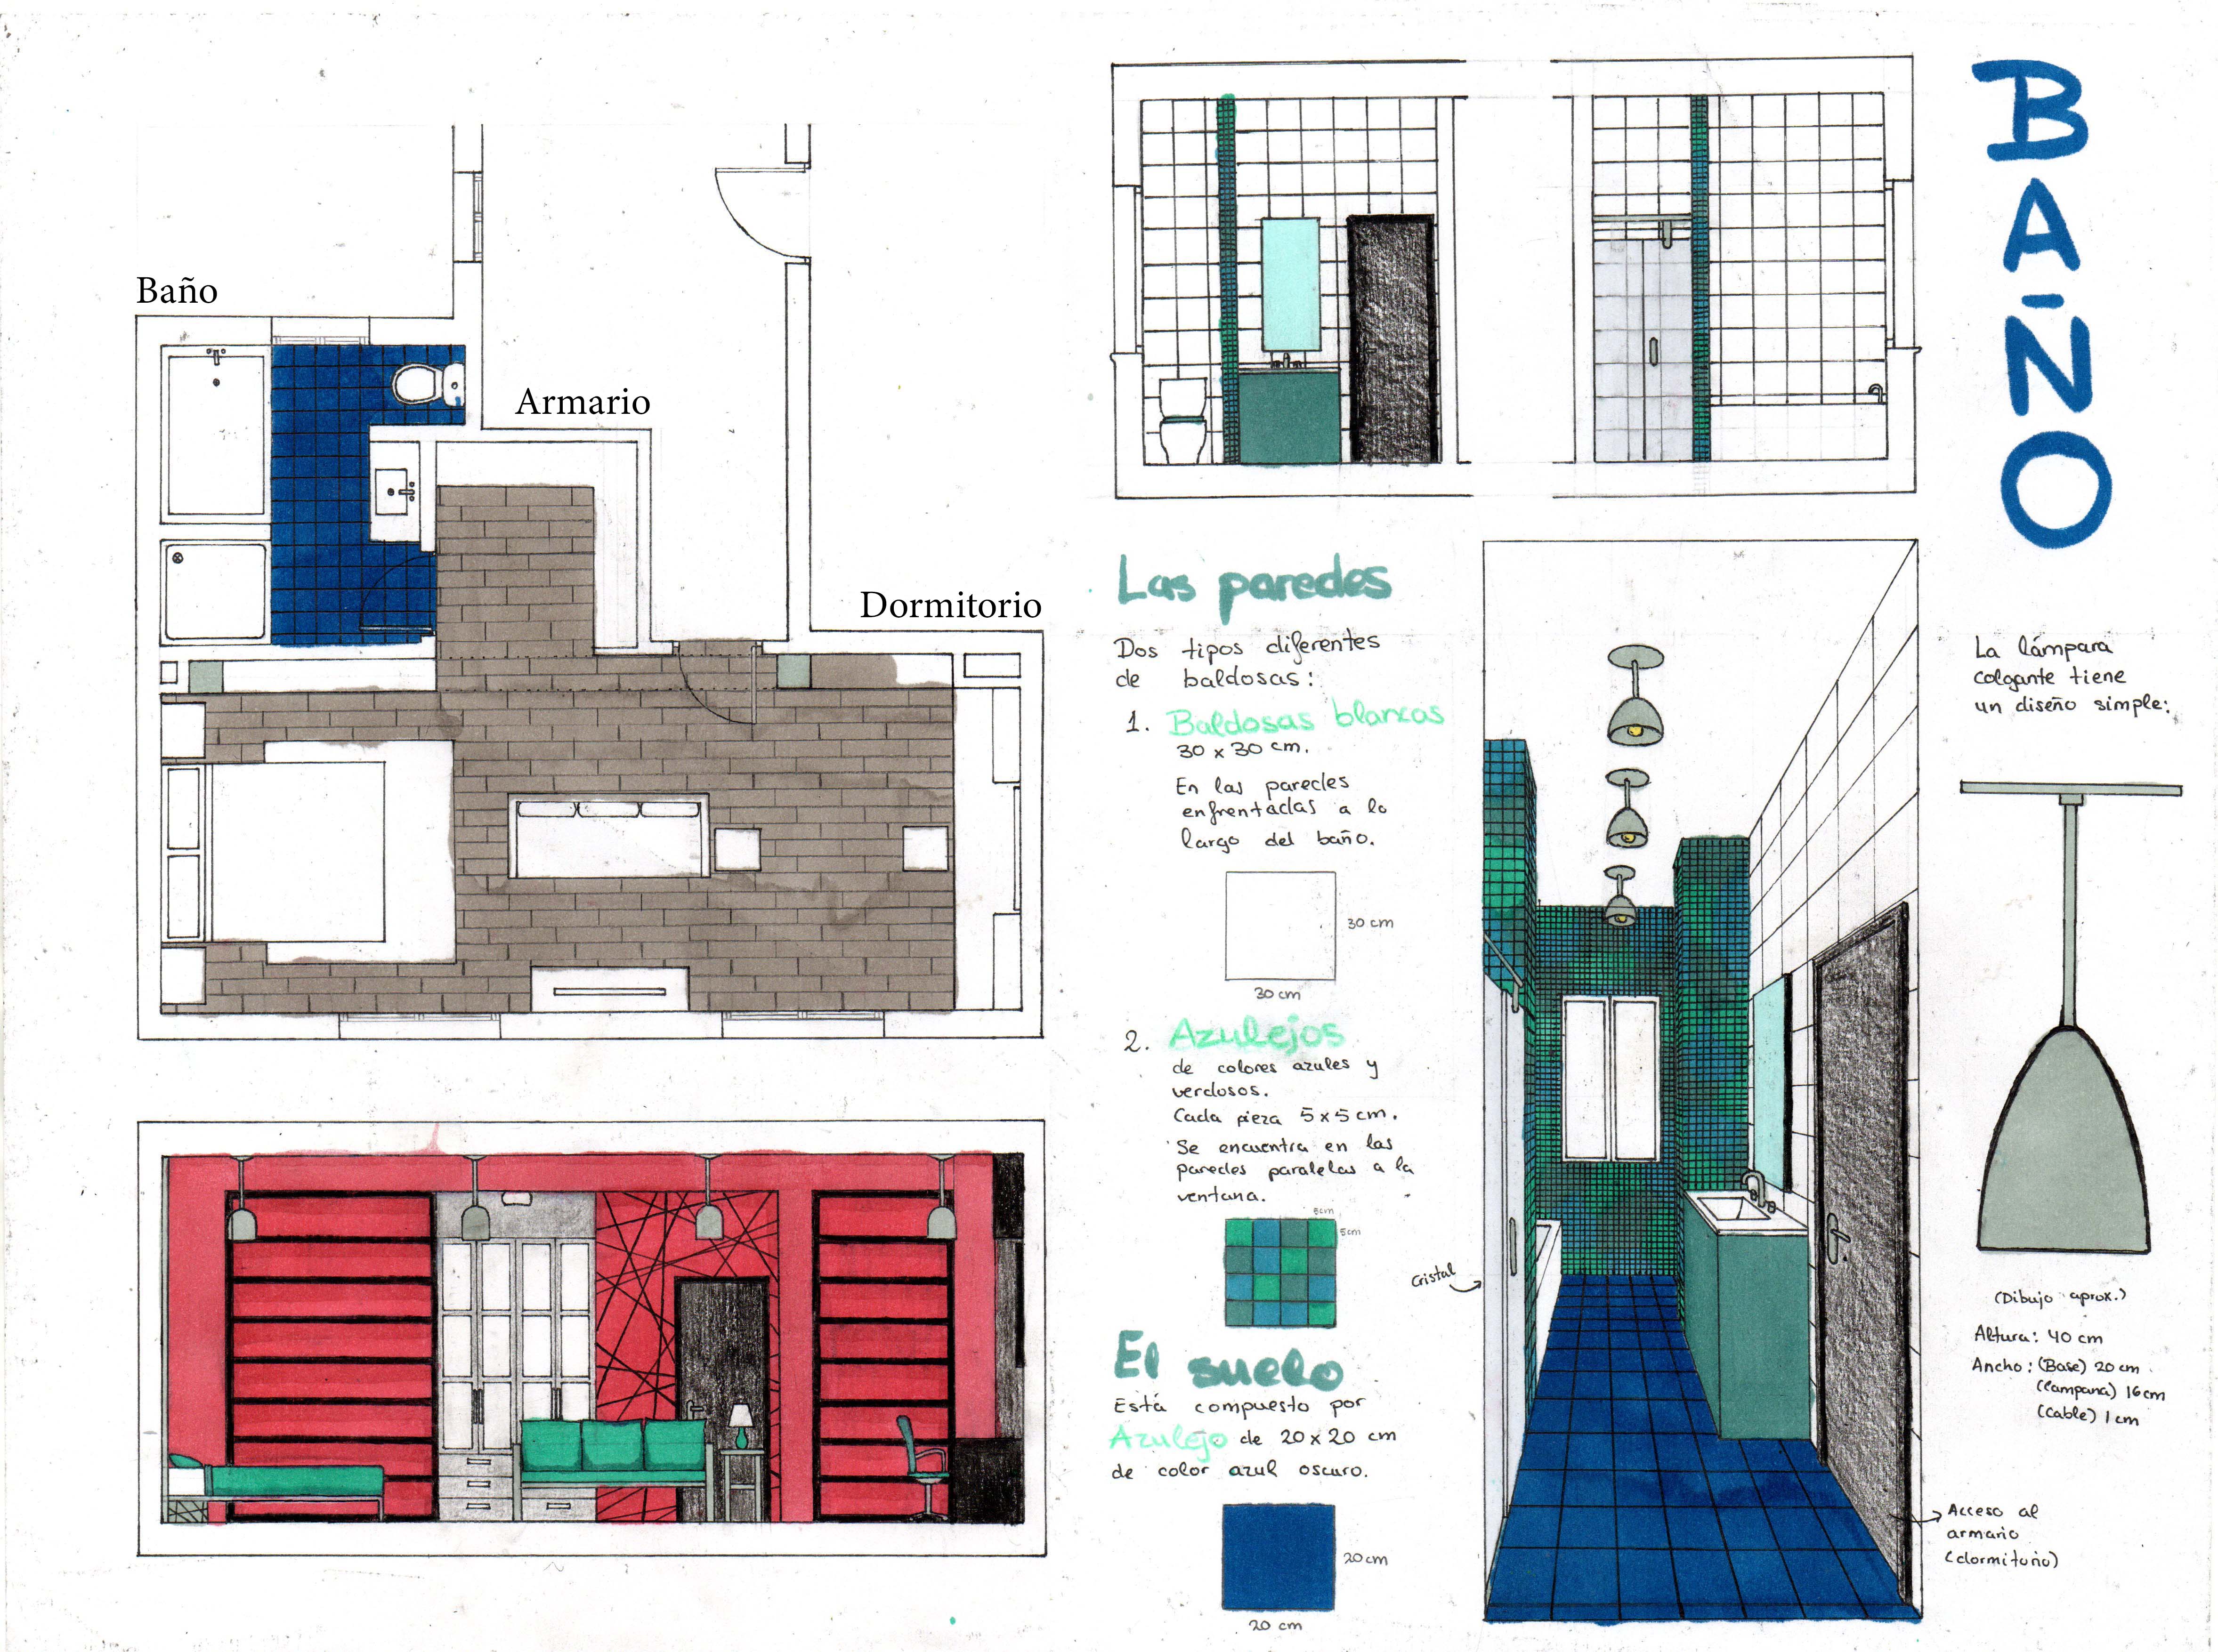 Dormitorio Ideal para estudiantes by Ana Paola Cubas Zanabria - Creative Work